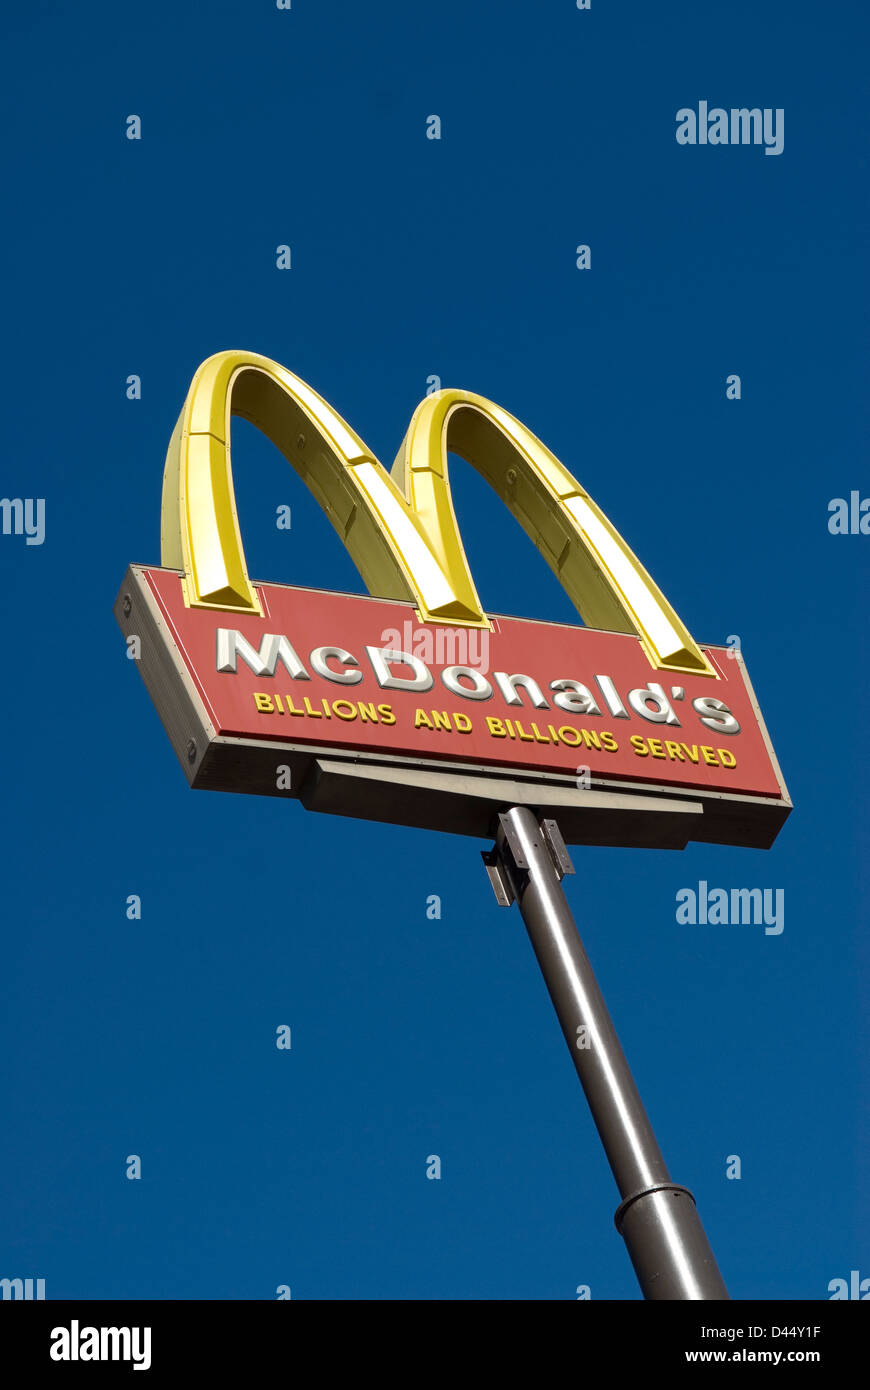 McDonalds sign USA. Stock Photo